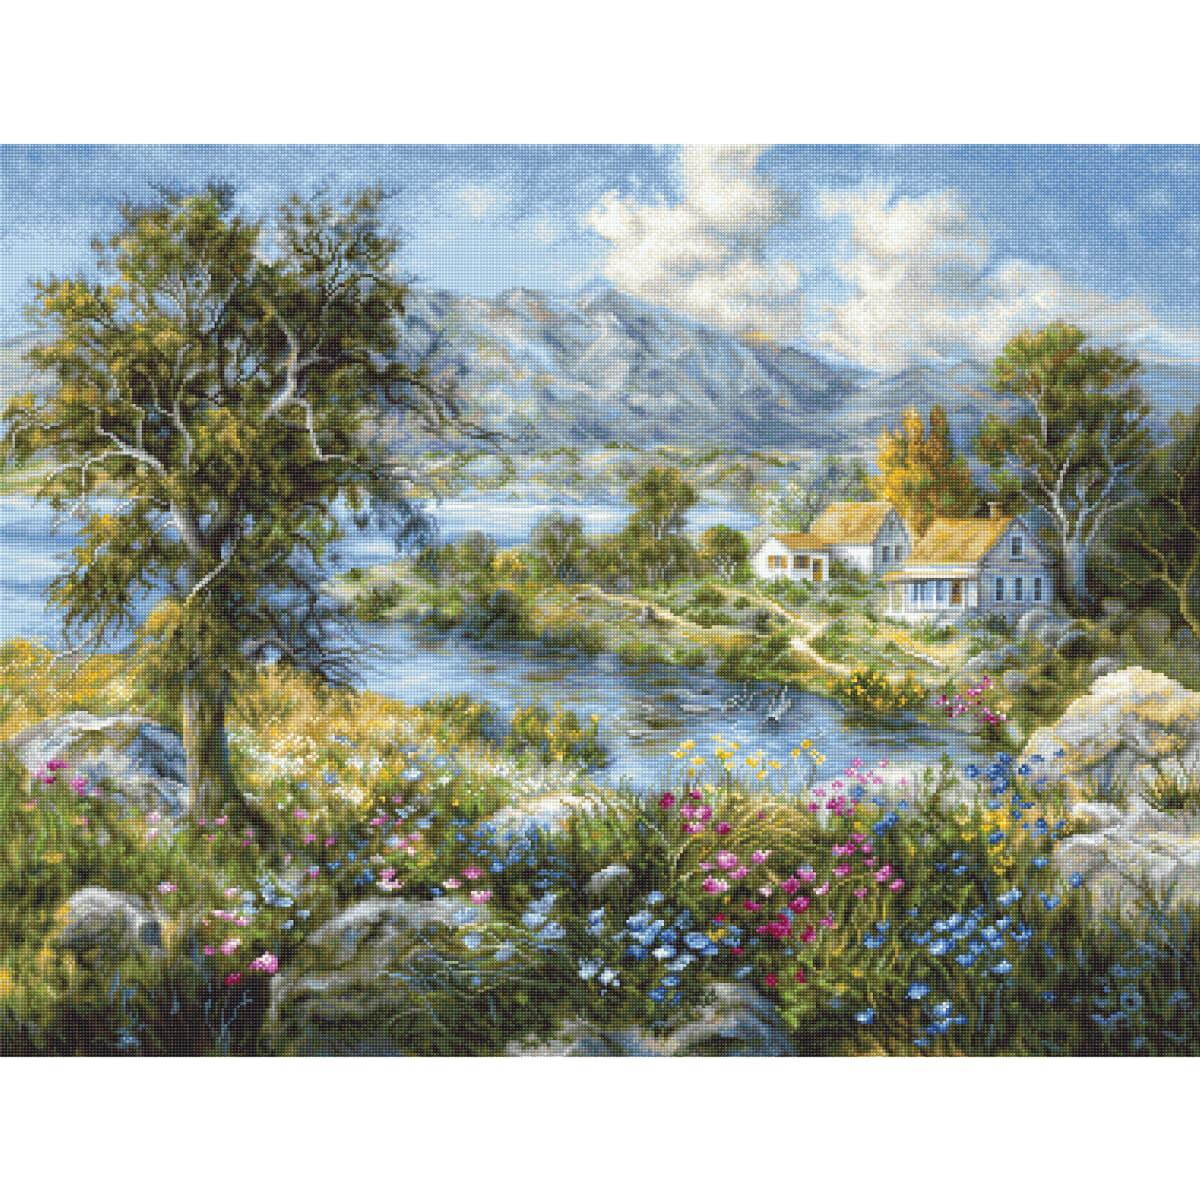 A vibrant landscape painting shows a calm river lined...